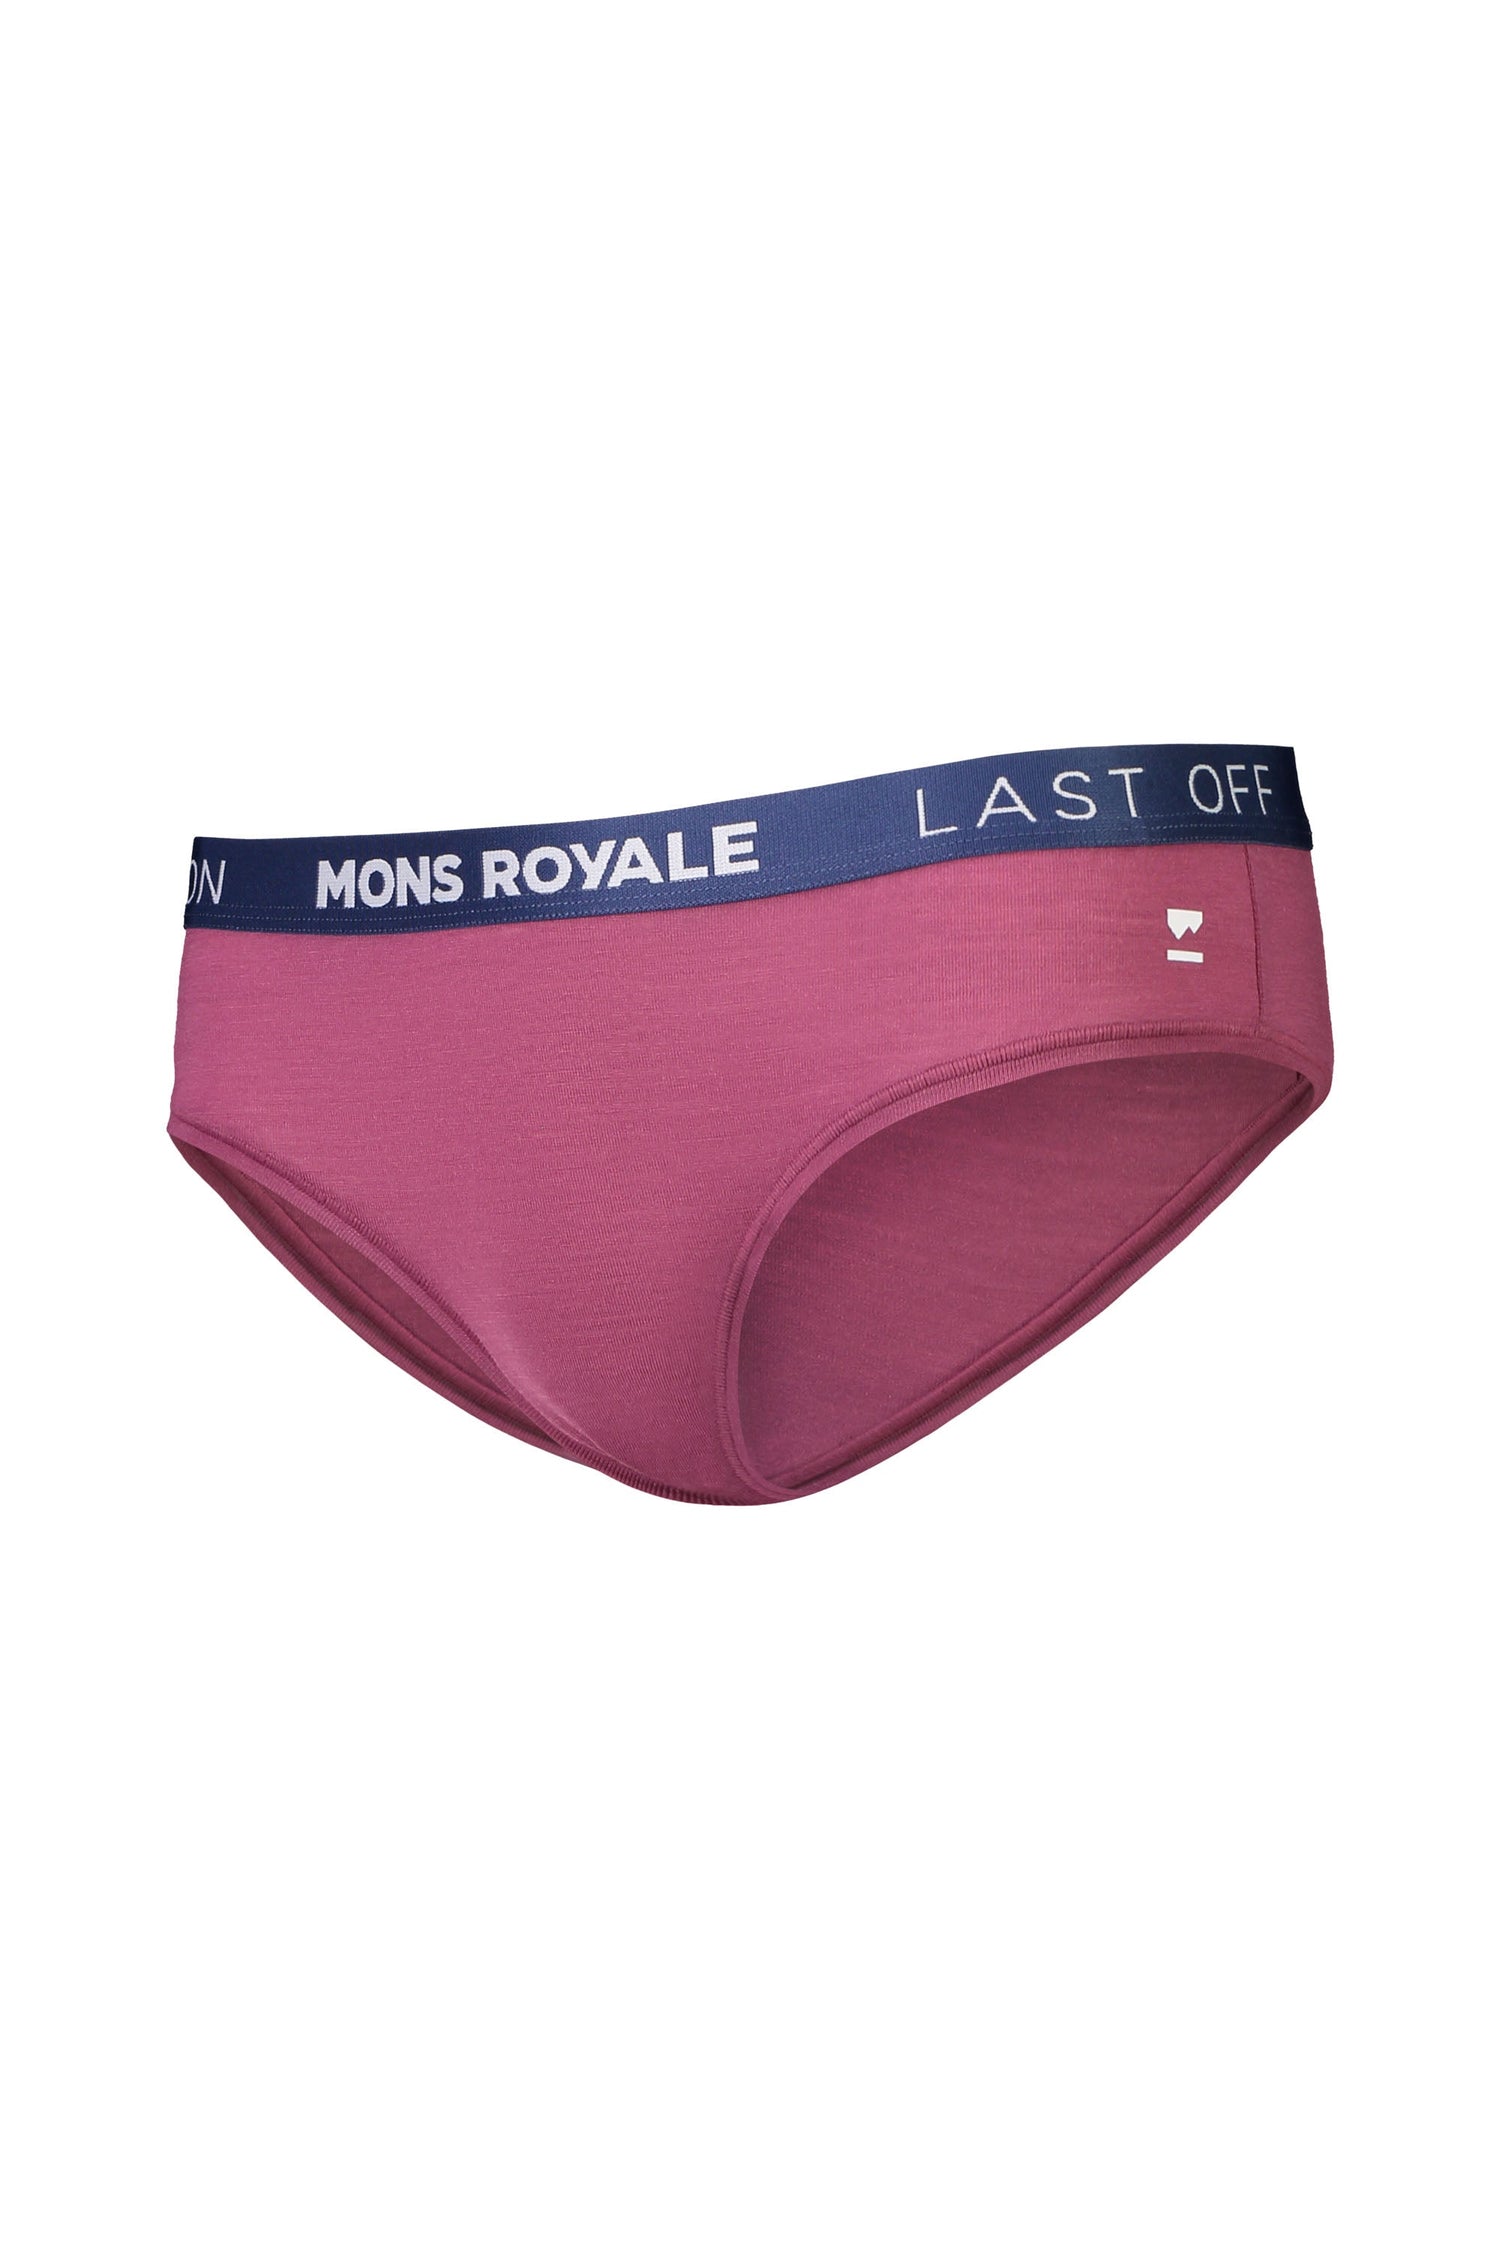 Mons Royale Folo Brief - Merino wool Berry XL Underwear